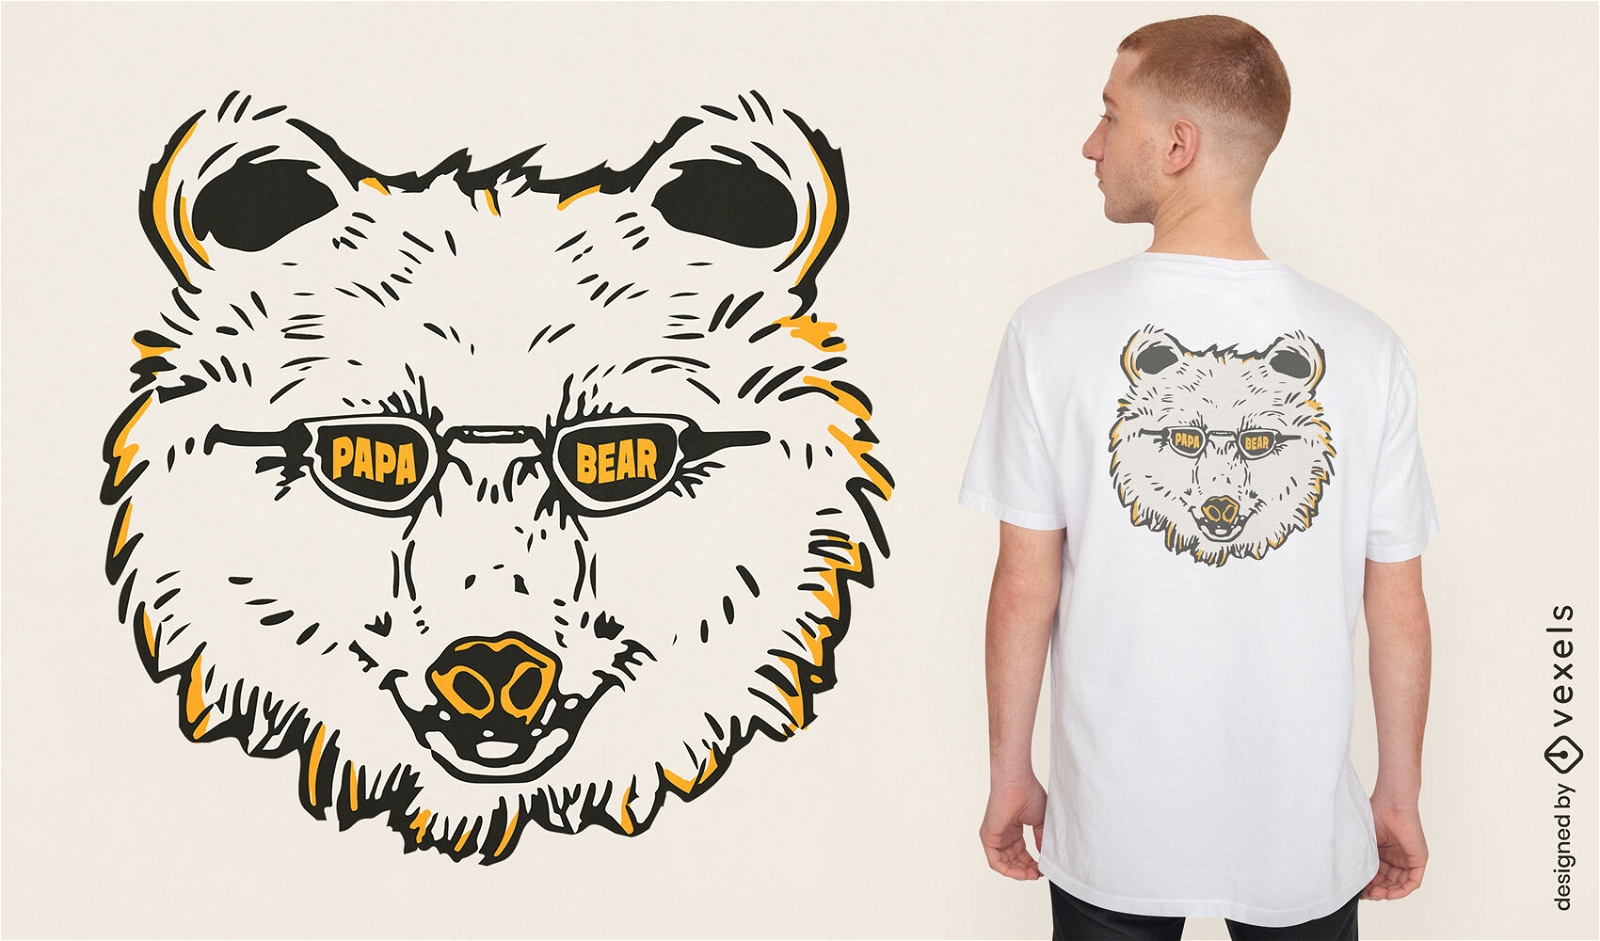 Cooles Papabär-T-Shirt-Design mit Sonnenbrille